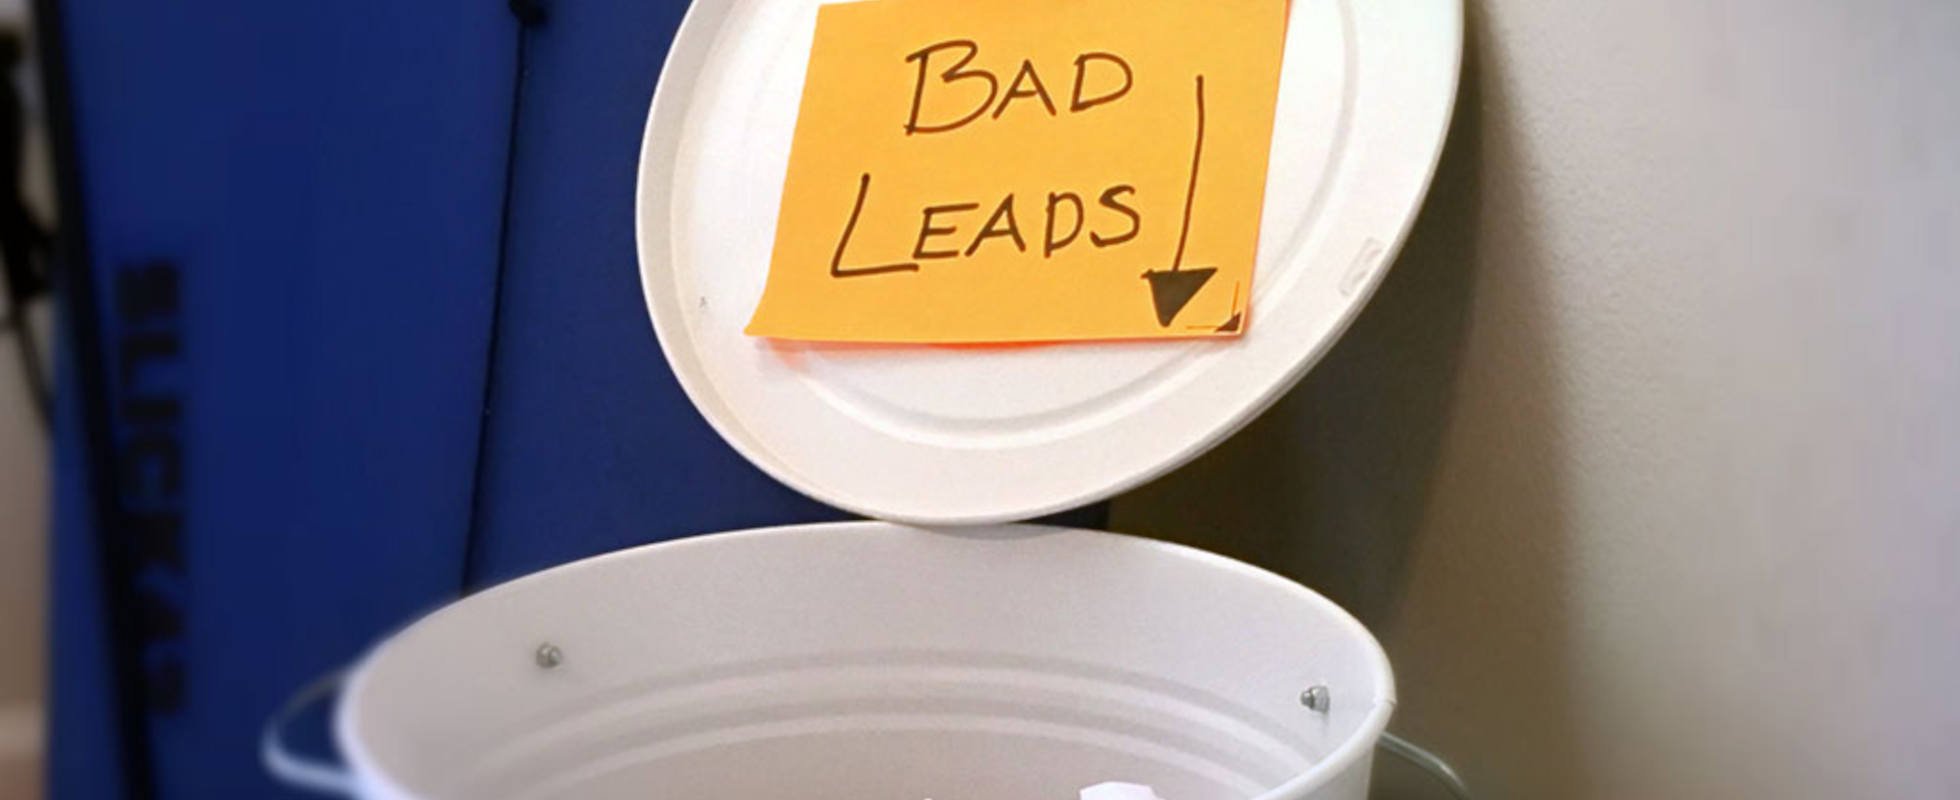 Bad leads